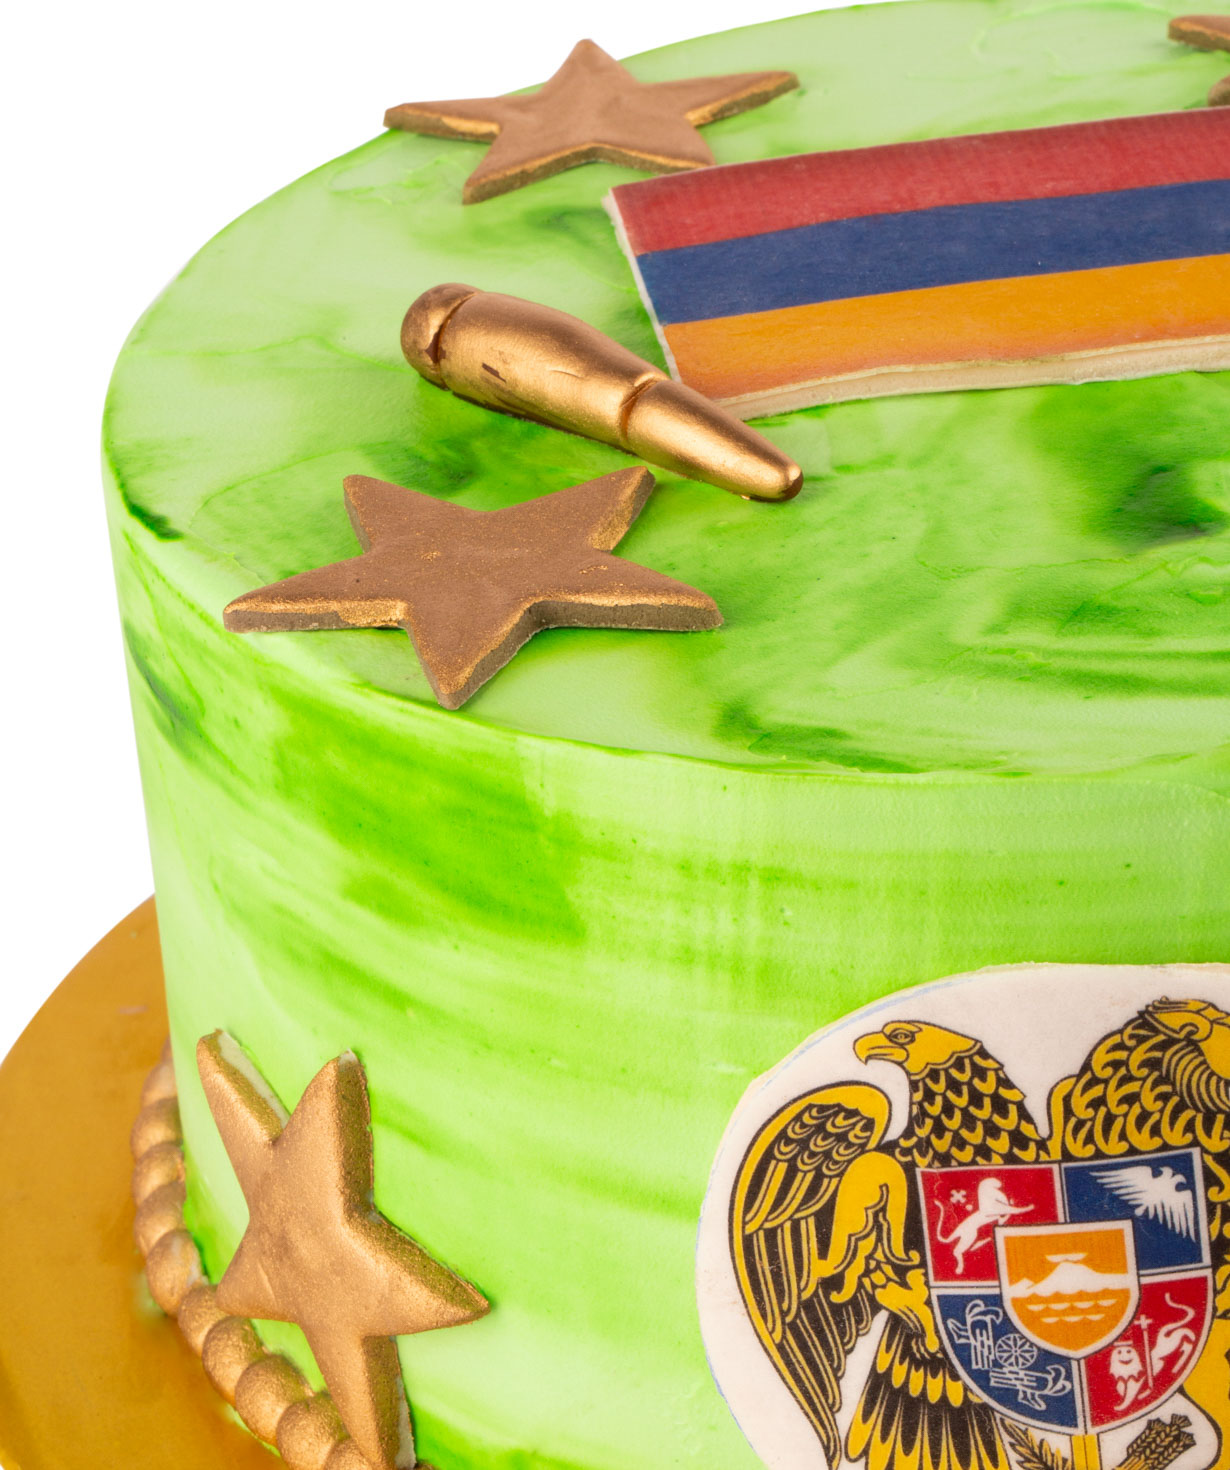 Cake `Armenian army`